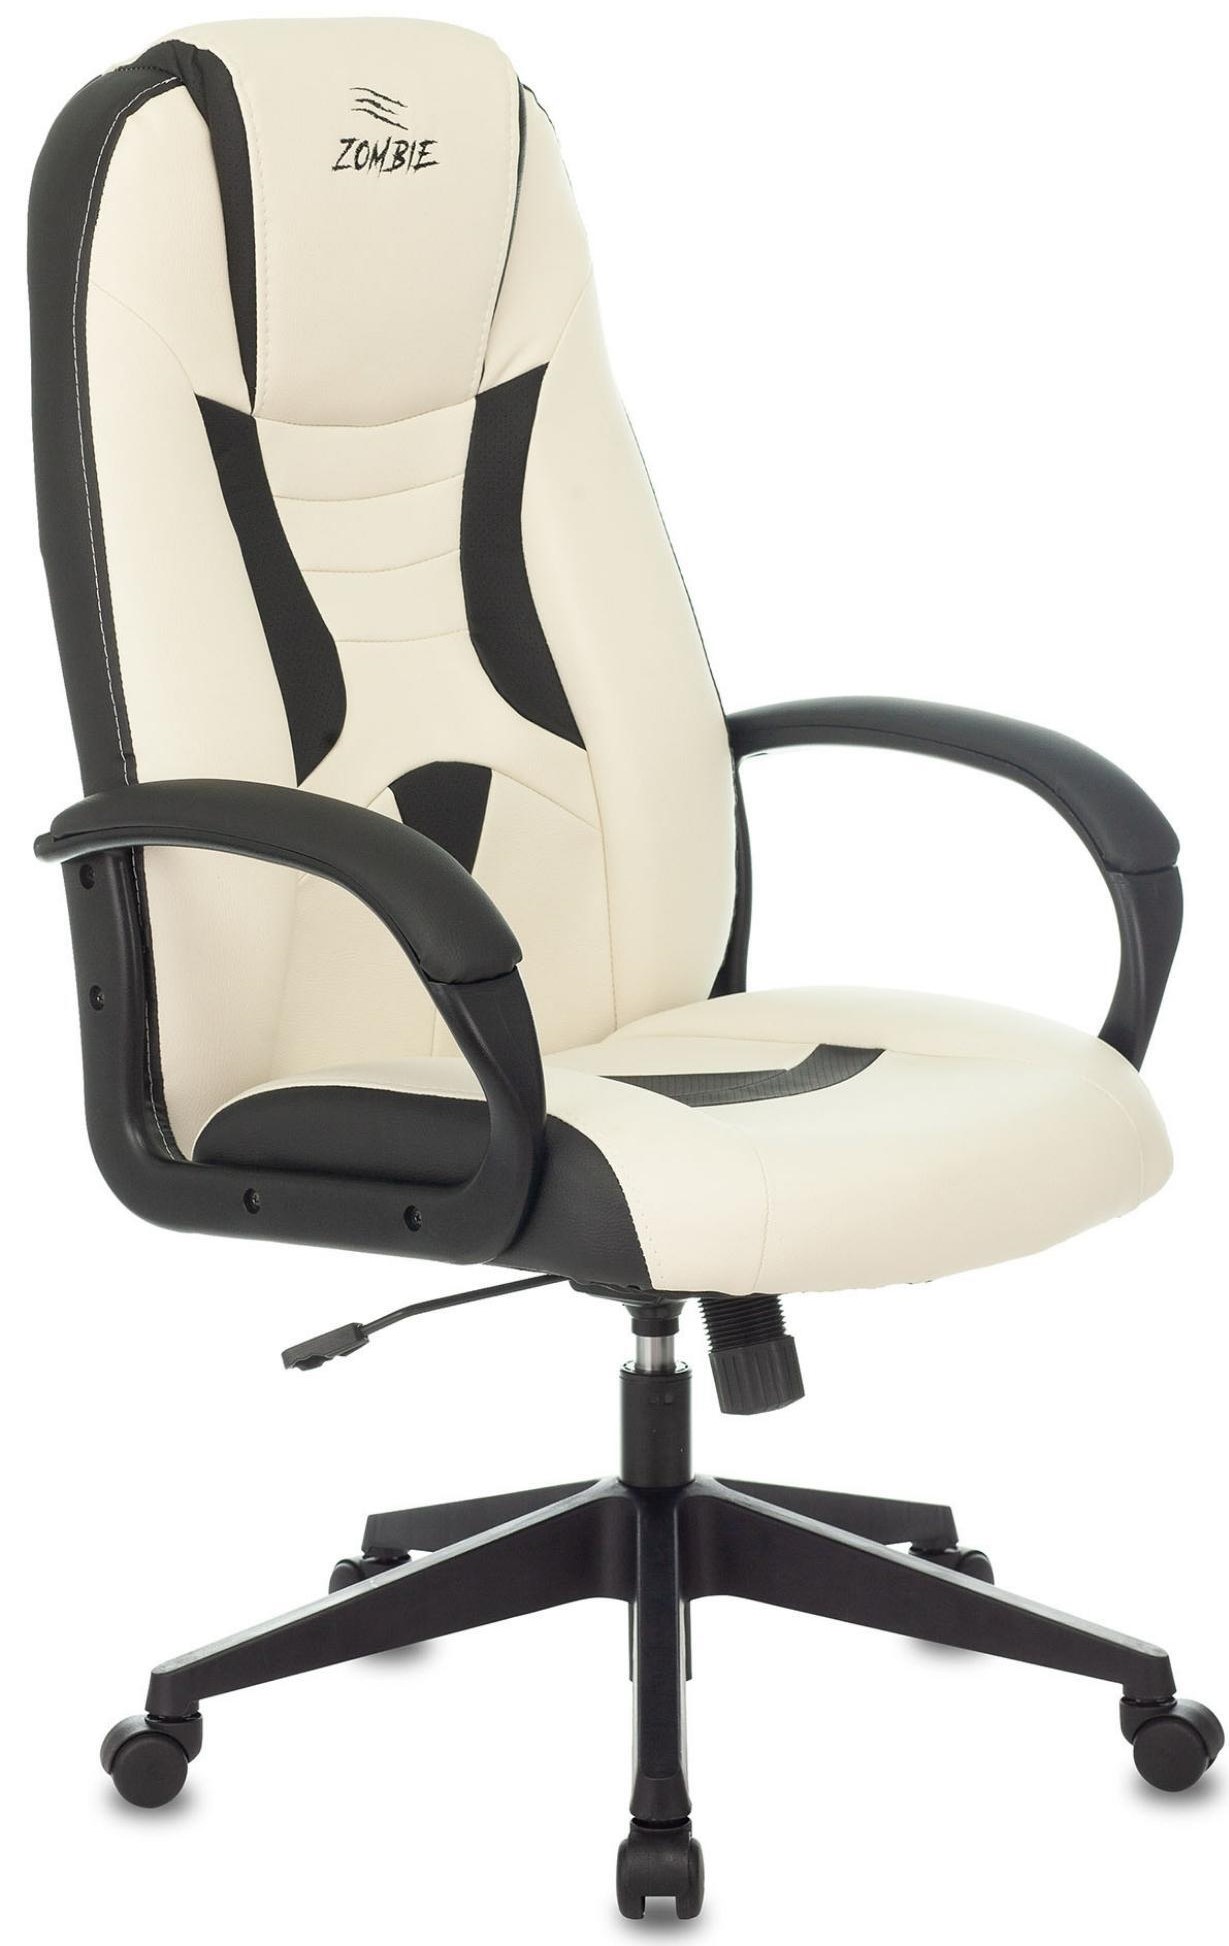 Кресло геймерское ZOMBIE 8 WHITE цвет:Белый/Черный,пластик Бюрократ нагрузка 120 кг